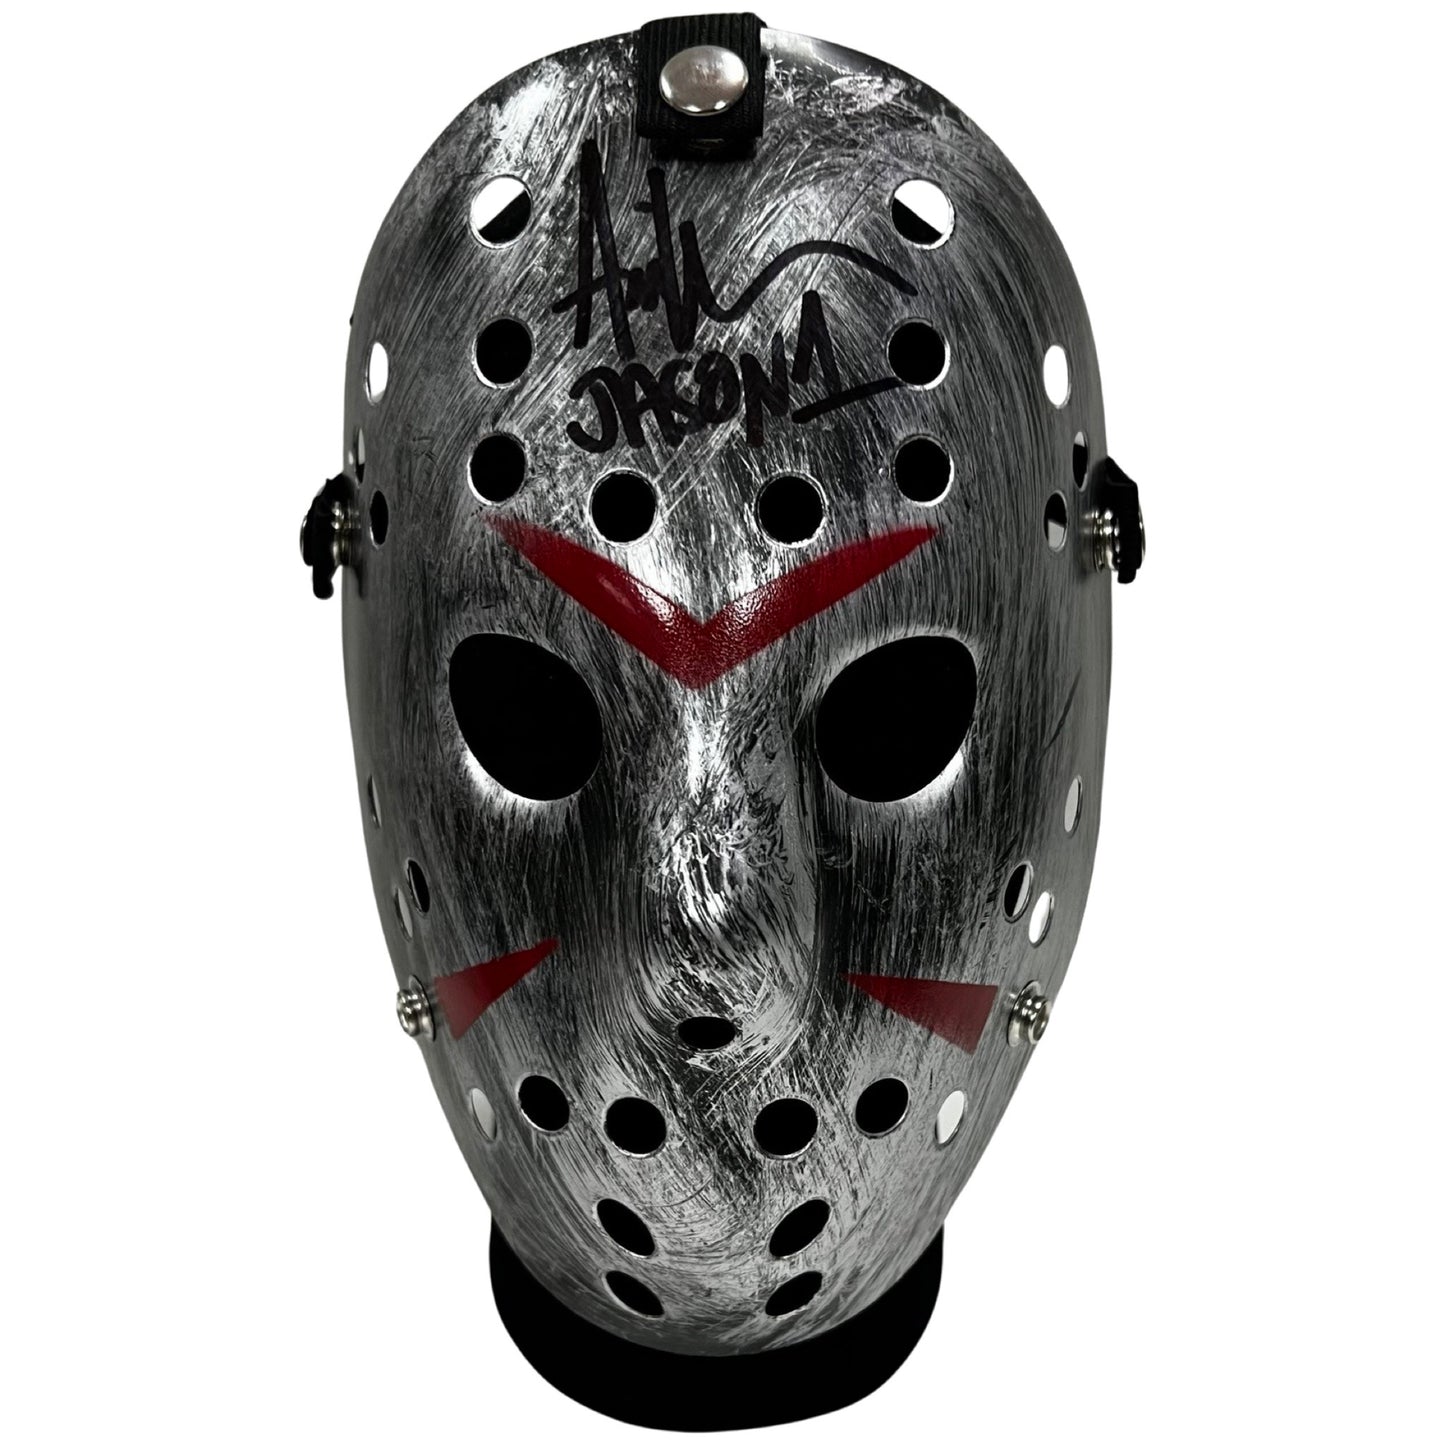 Ari Lehman Autographed Jason Voorhees Friday the 13th Silver Mask “Jason 1” Inscription Black Ink Steiner CX